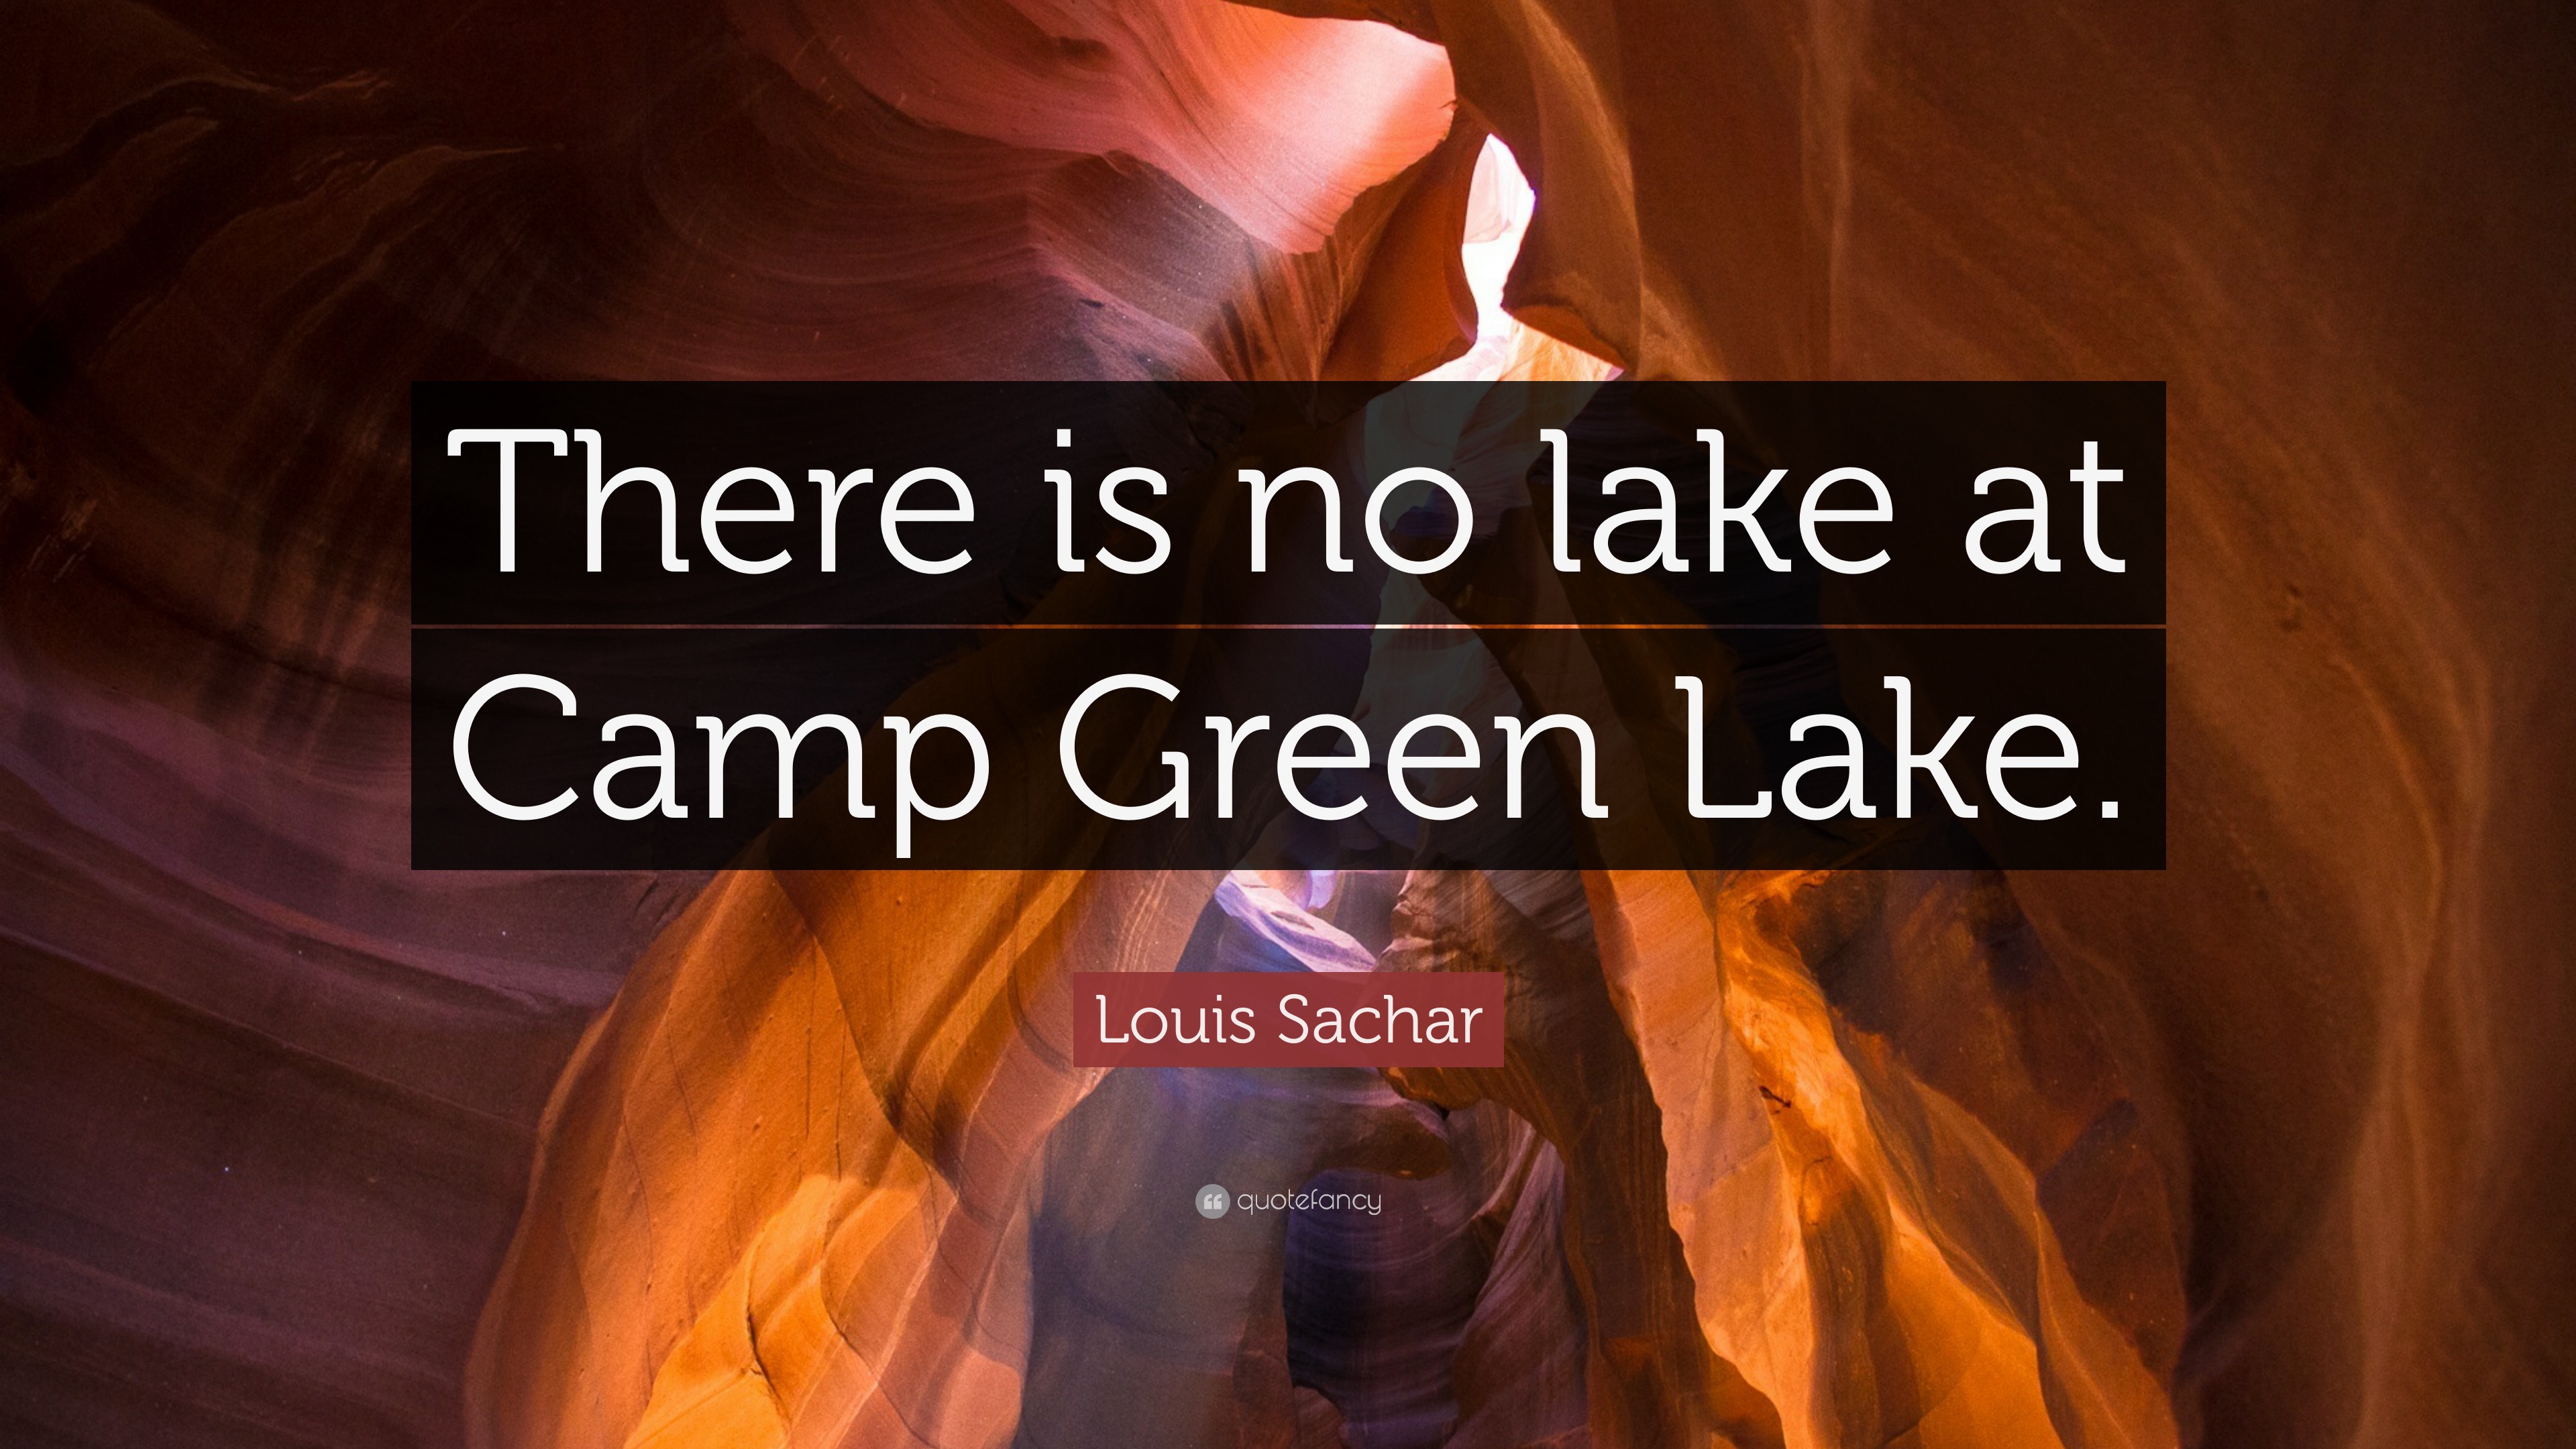 Louis Sachar Quote: “There is no lake at Camp Green Lake.”